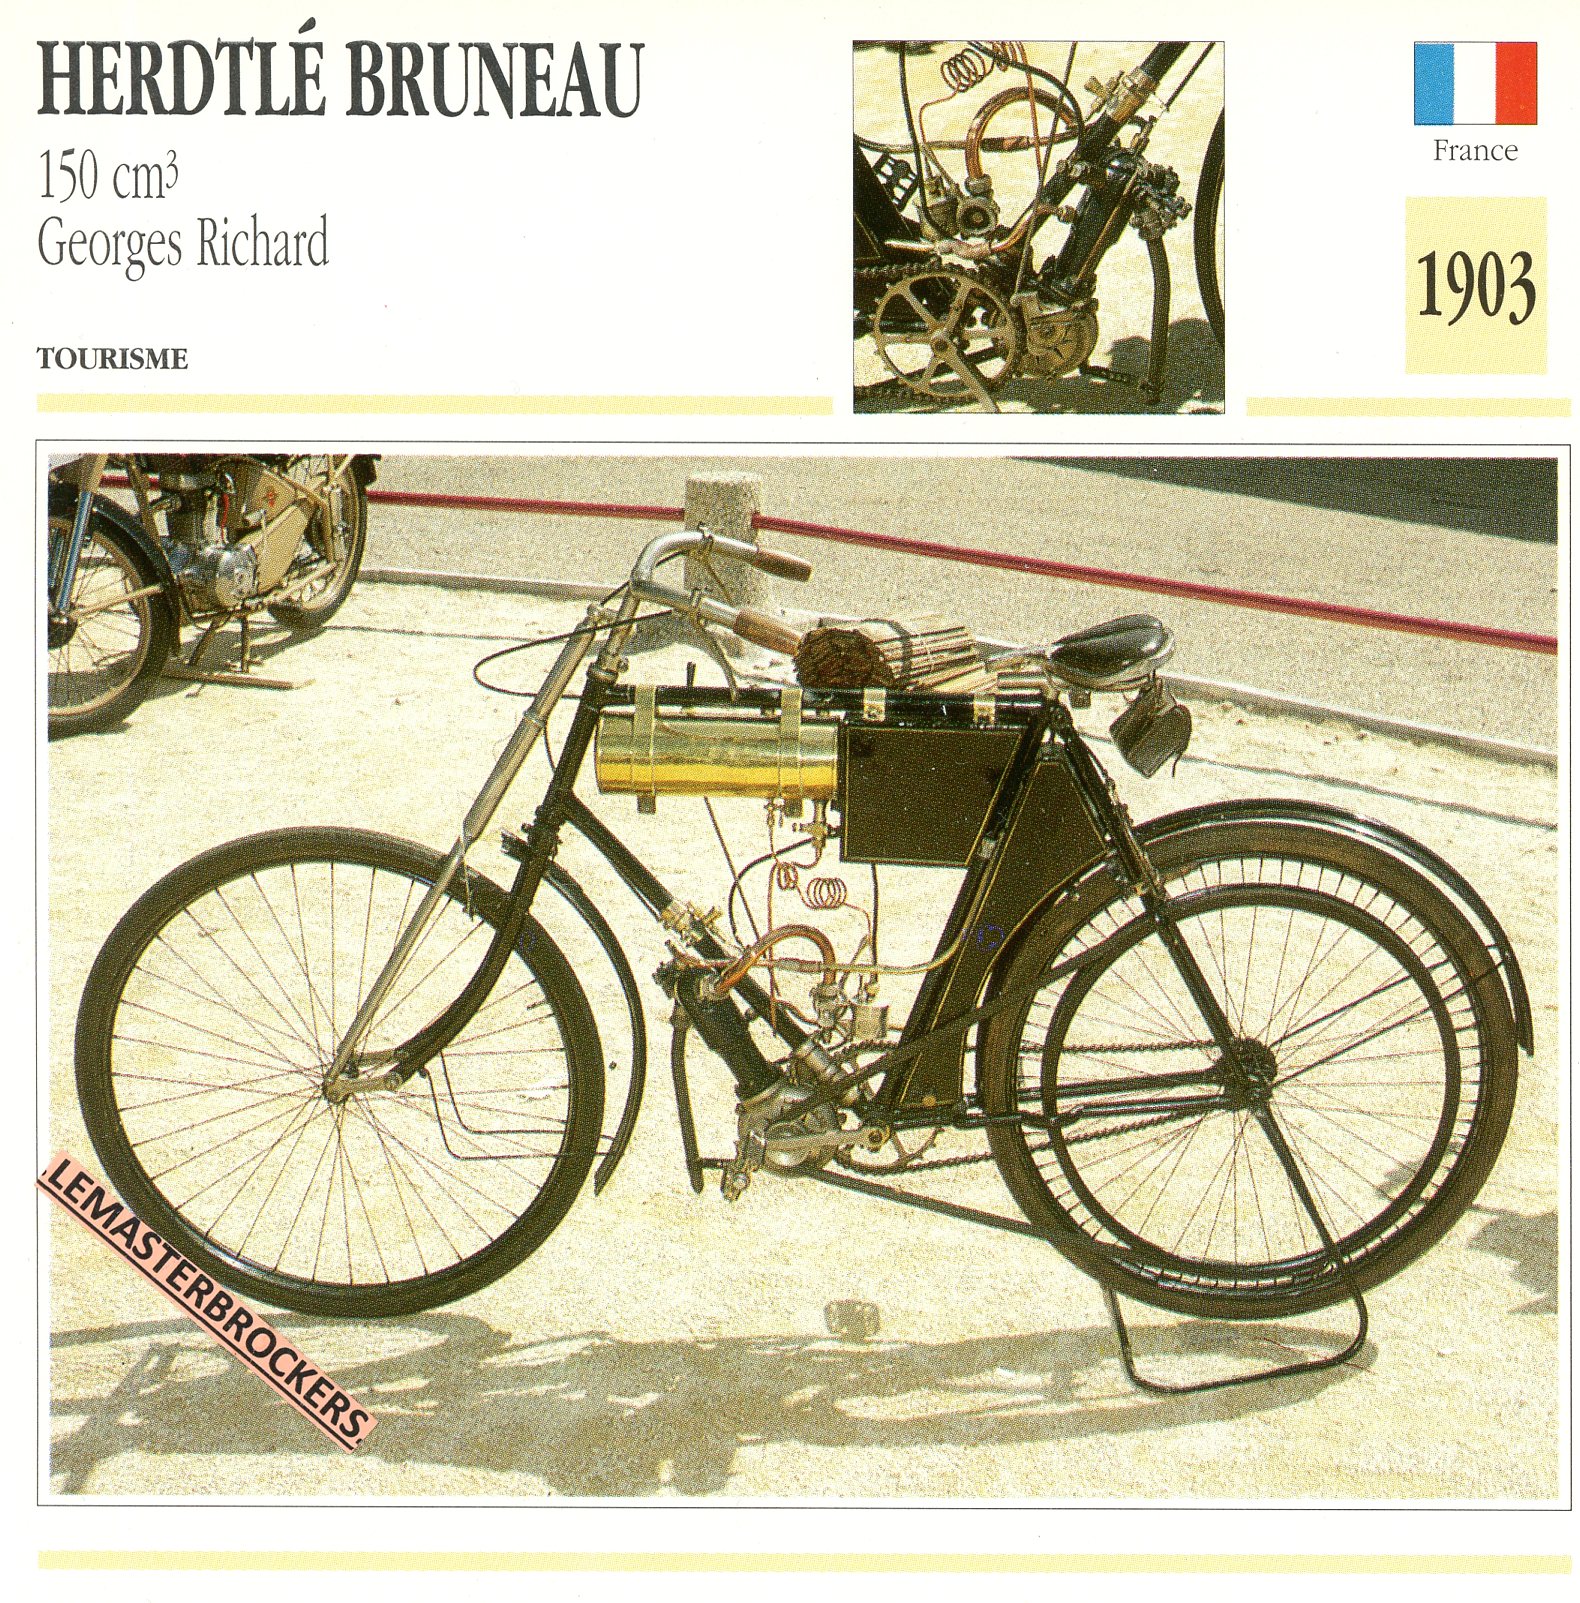 HERDTLÉ-BRUNEAU-150-CM3-GEORGES-RICHARD-1903-FICHE-MOTO-LEMASTERBROCKERS